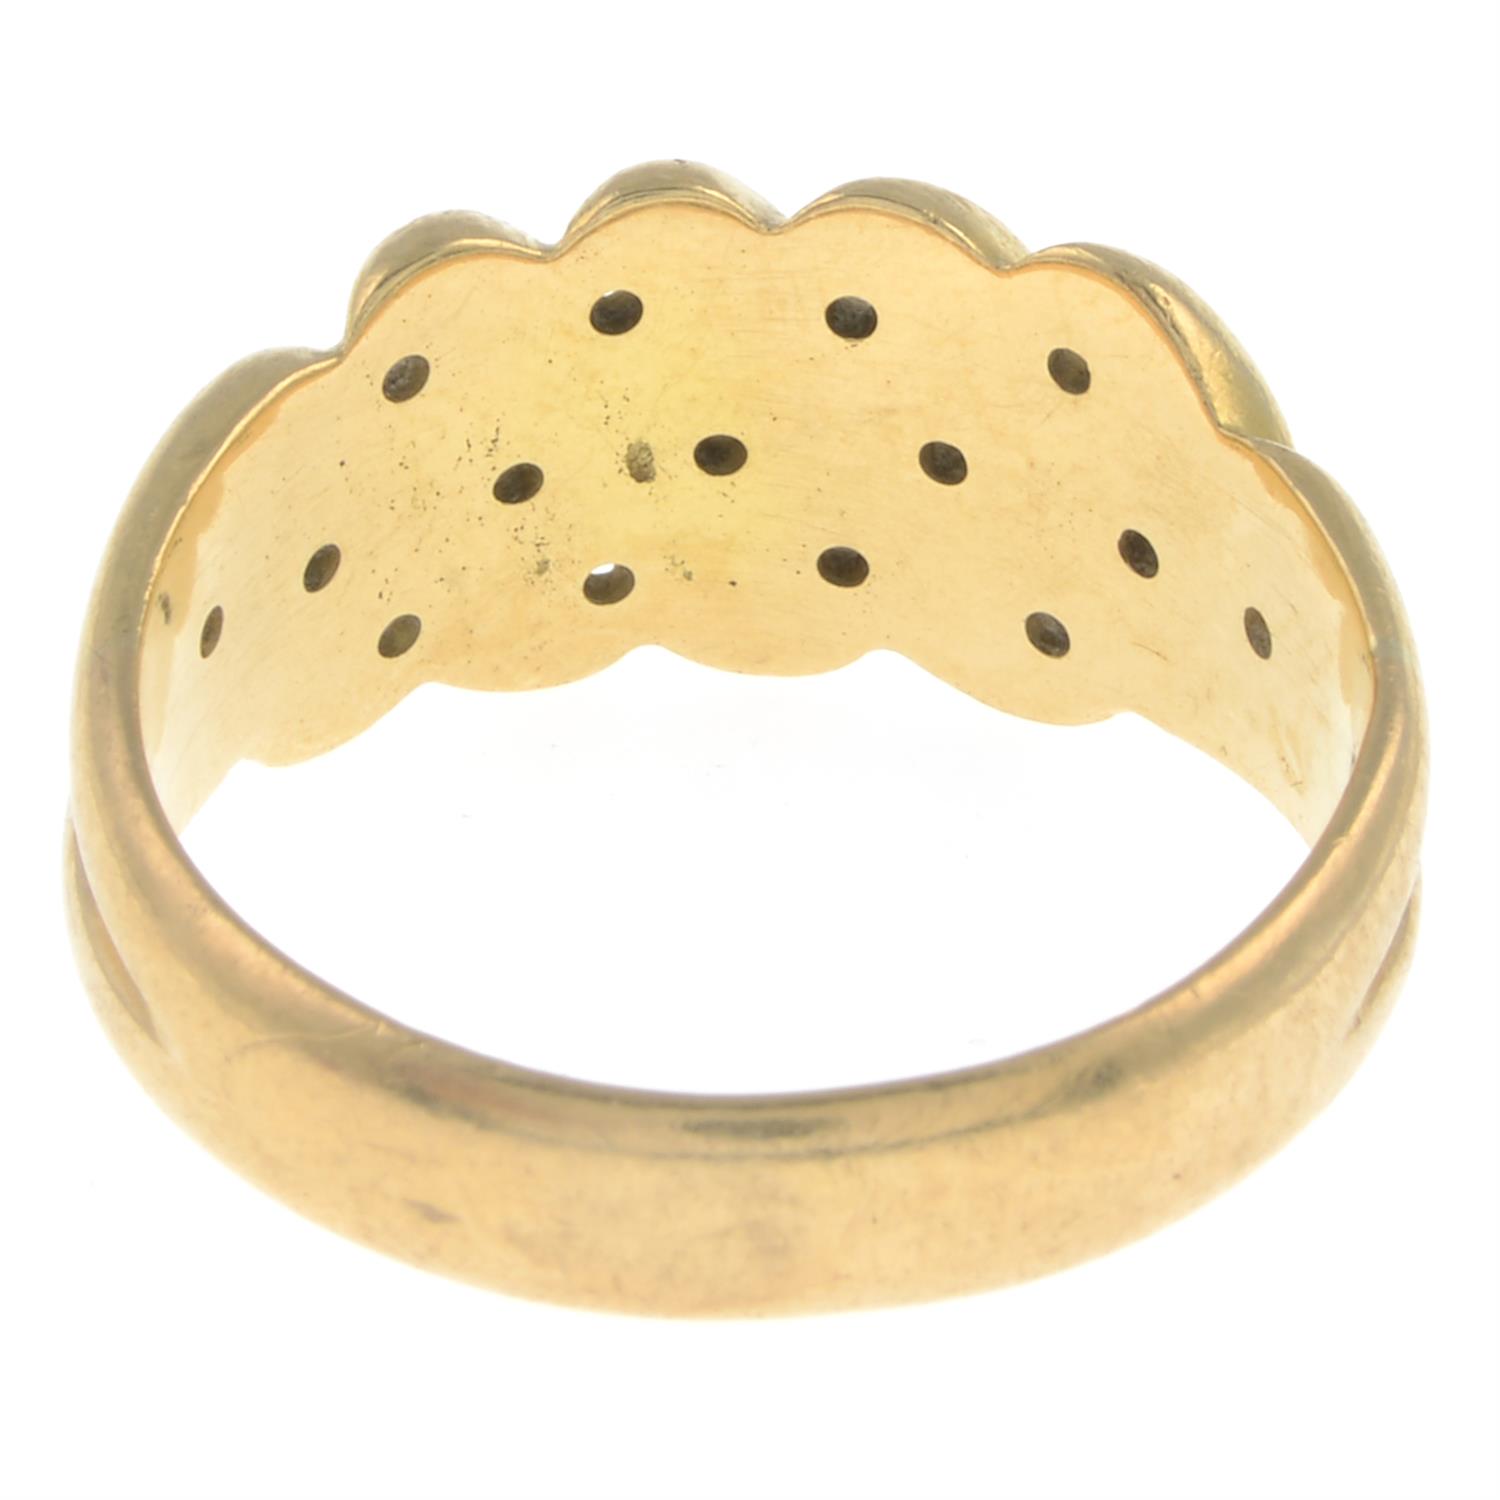 Edwardian 18ct gold keeper ring - Image 2 of 2